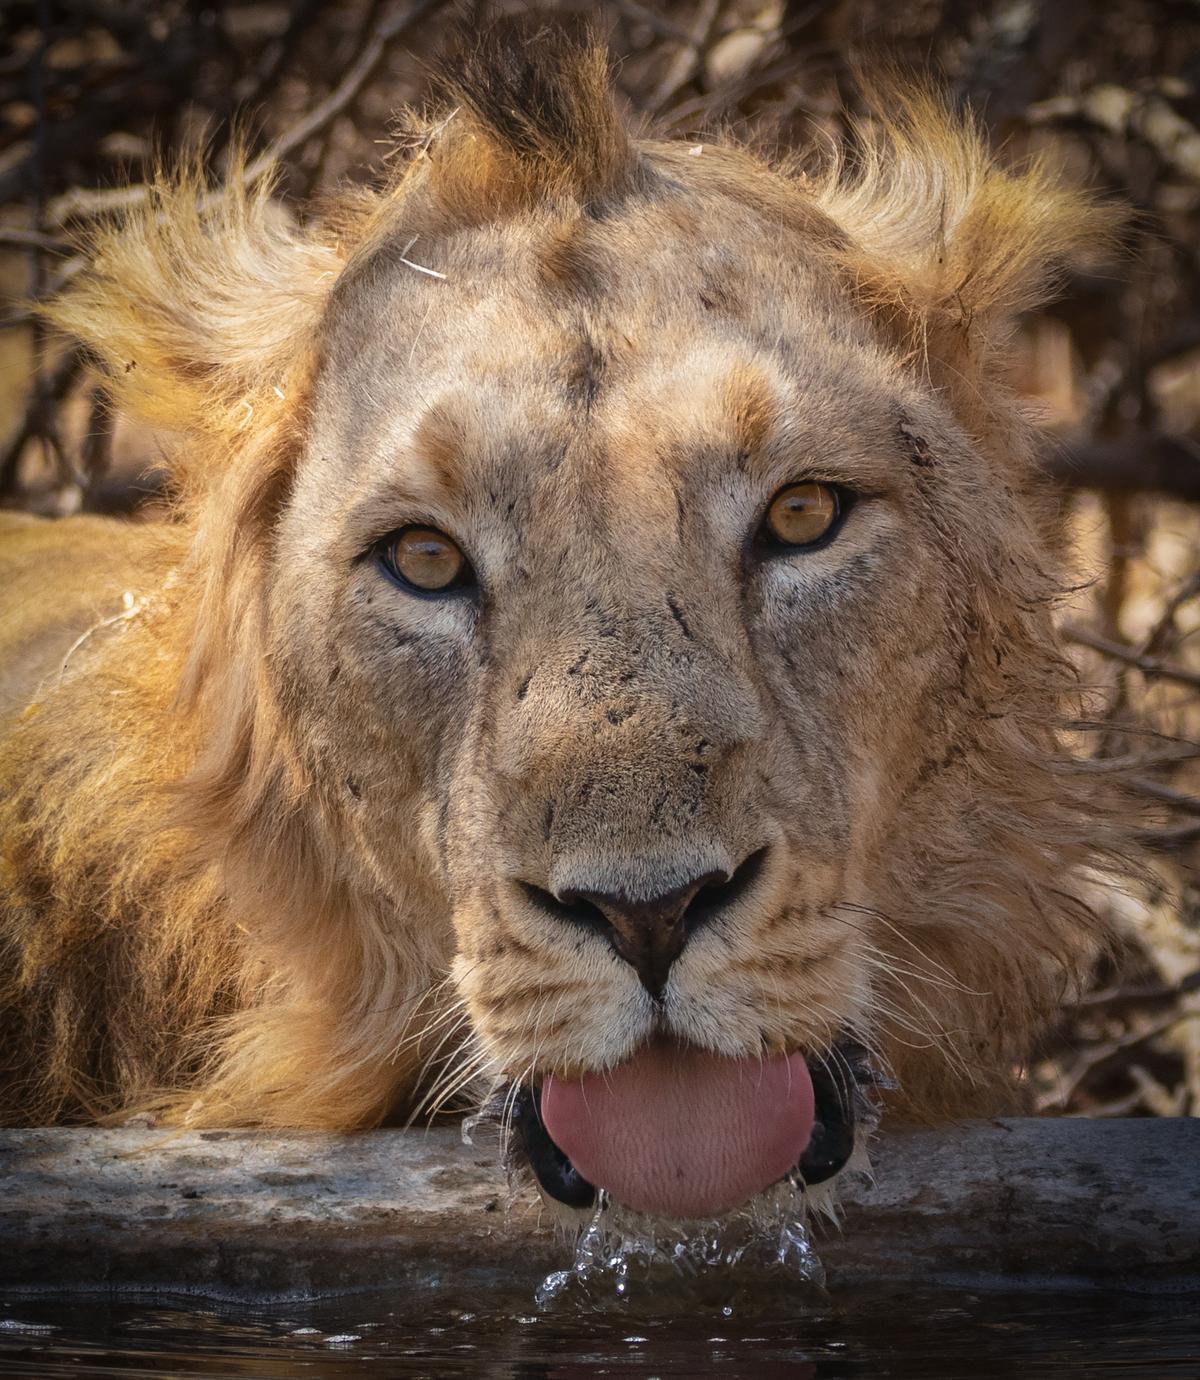 A thirsty Asiatic lion drinking water at Gir National Park, Gujarat. (Courtesy of <a href="https://www.instagram.com/hardik_shelat_photography/">Hardik Shelat</a>)